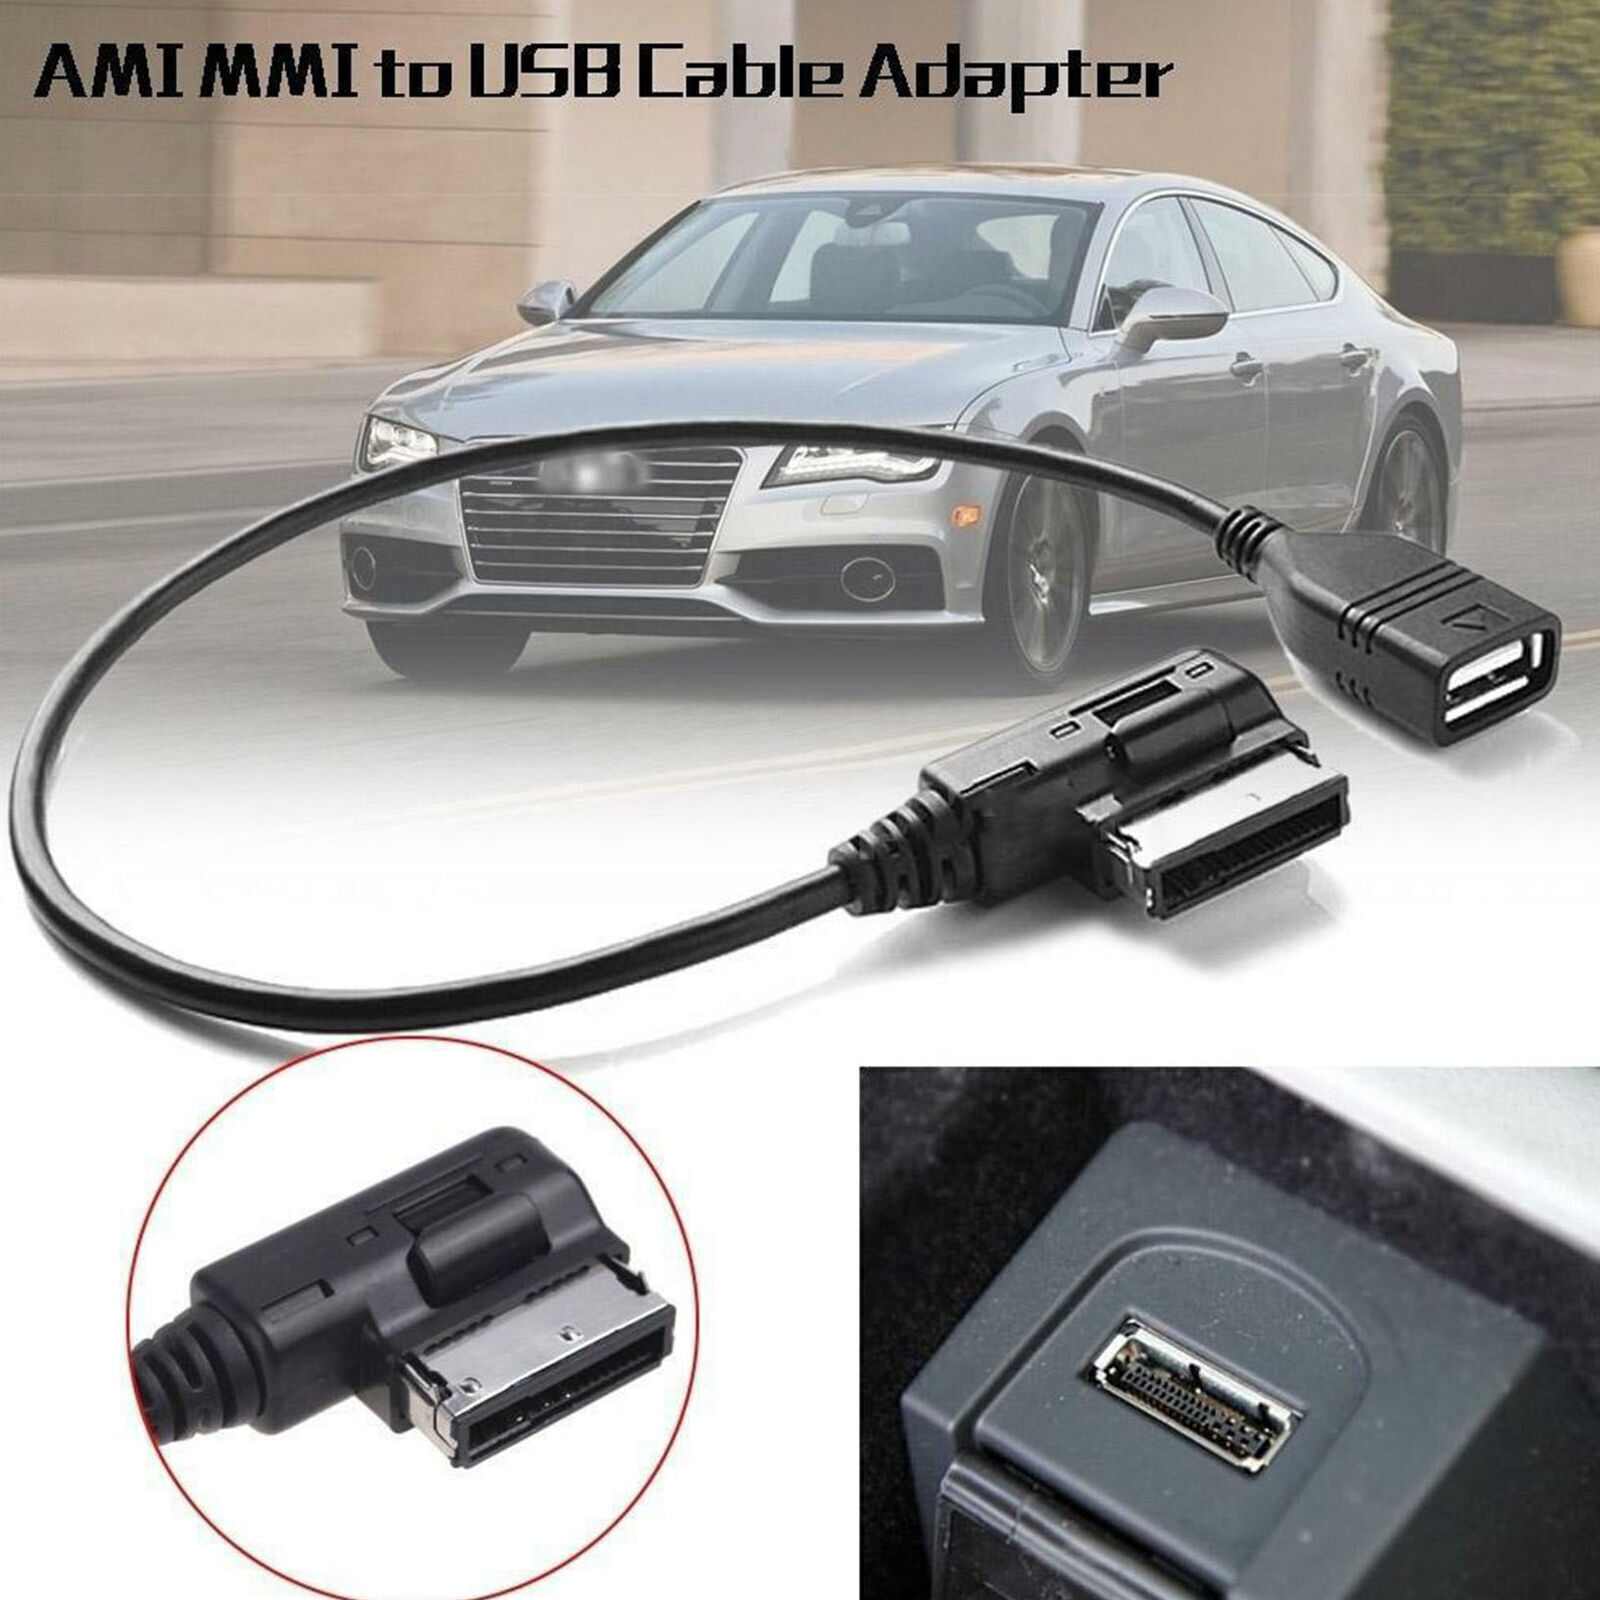 Music Interface Adaptor AMI MMI USB Cable Fits Audi A3 A4 A5 A6 A8 Q5 Q7 Q8 US